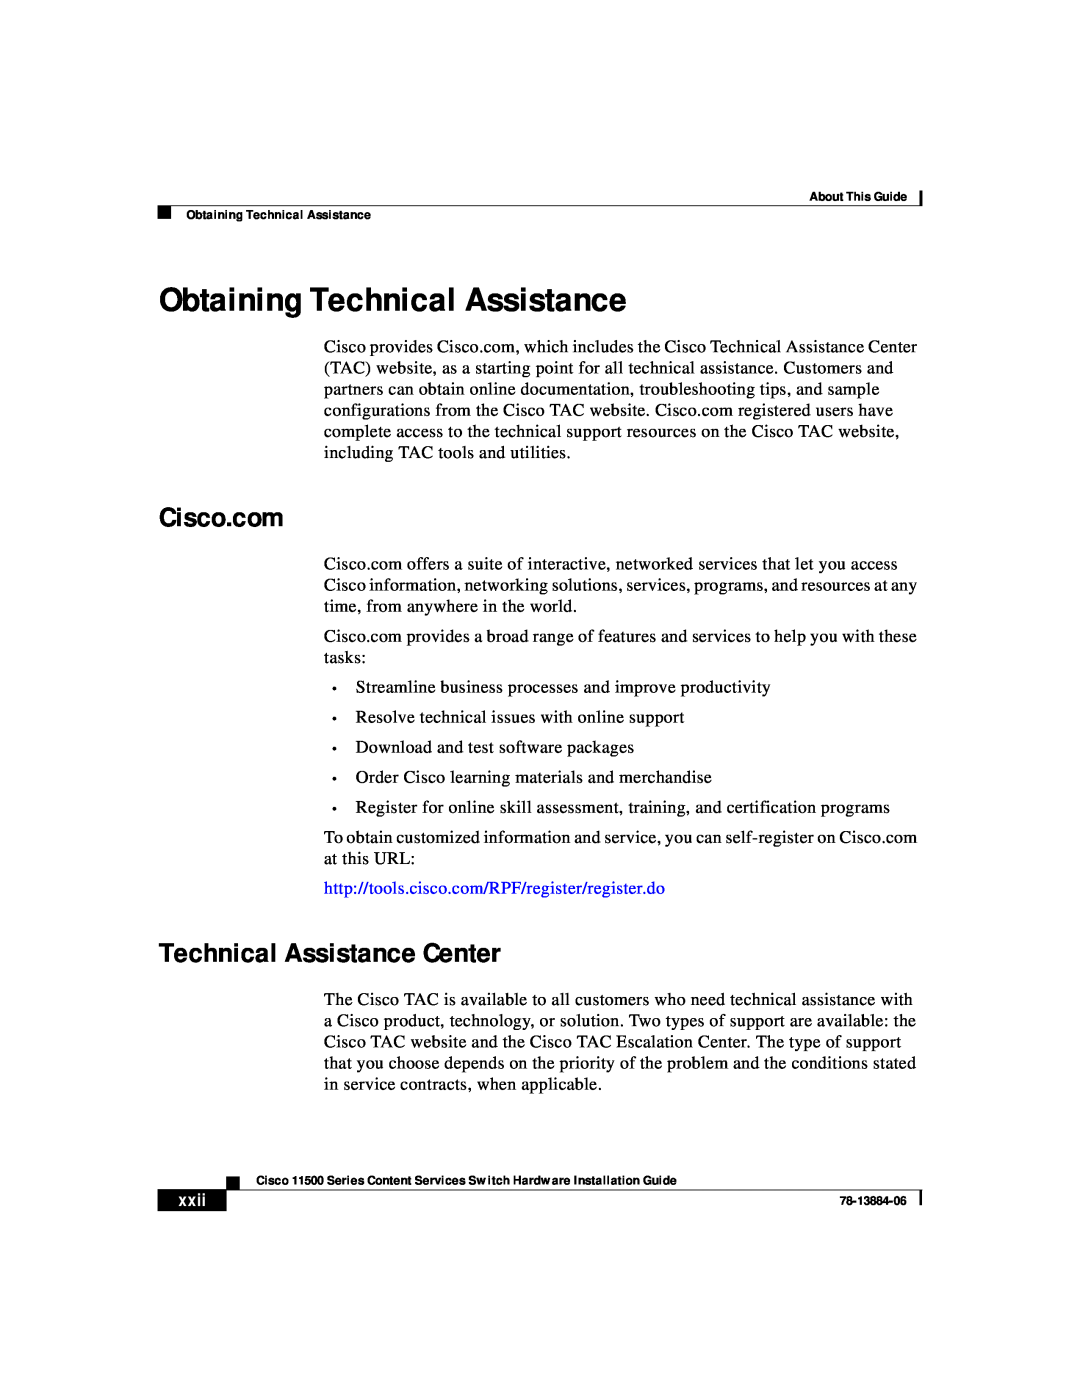 Cisco Systems 11500 Series manual Obtaining Technical Assistance, Technical Assistance Center, Cisco.com, xxii 